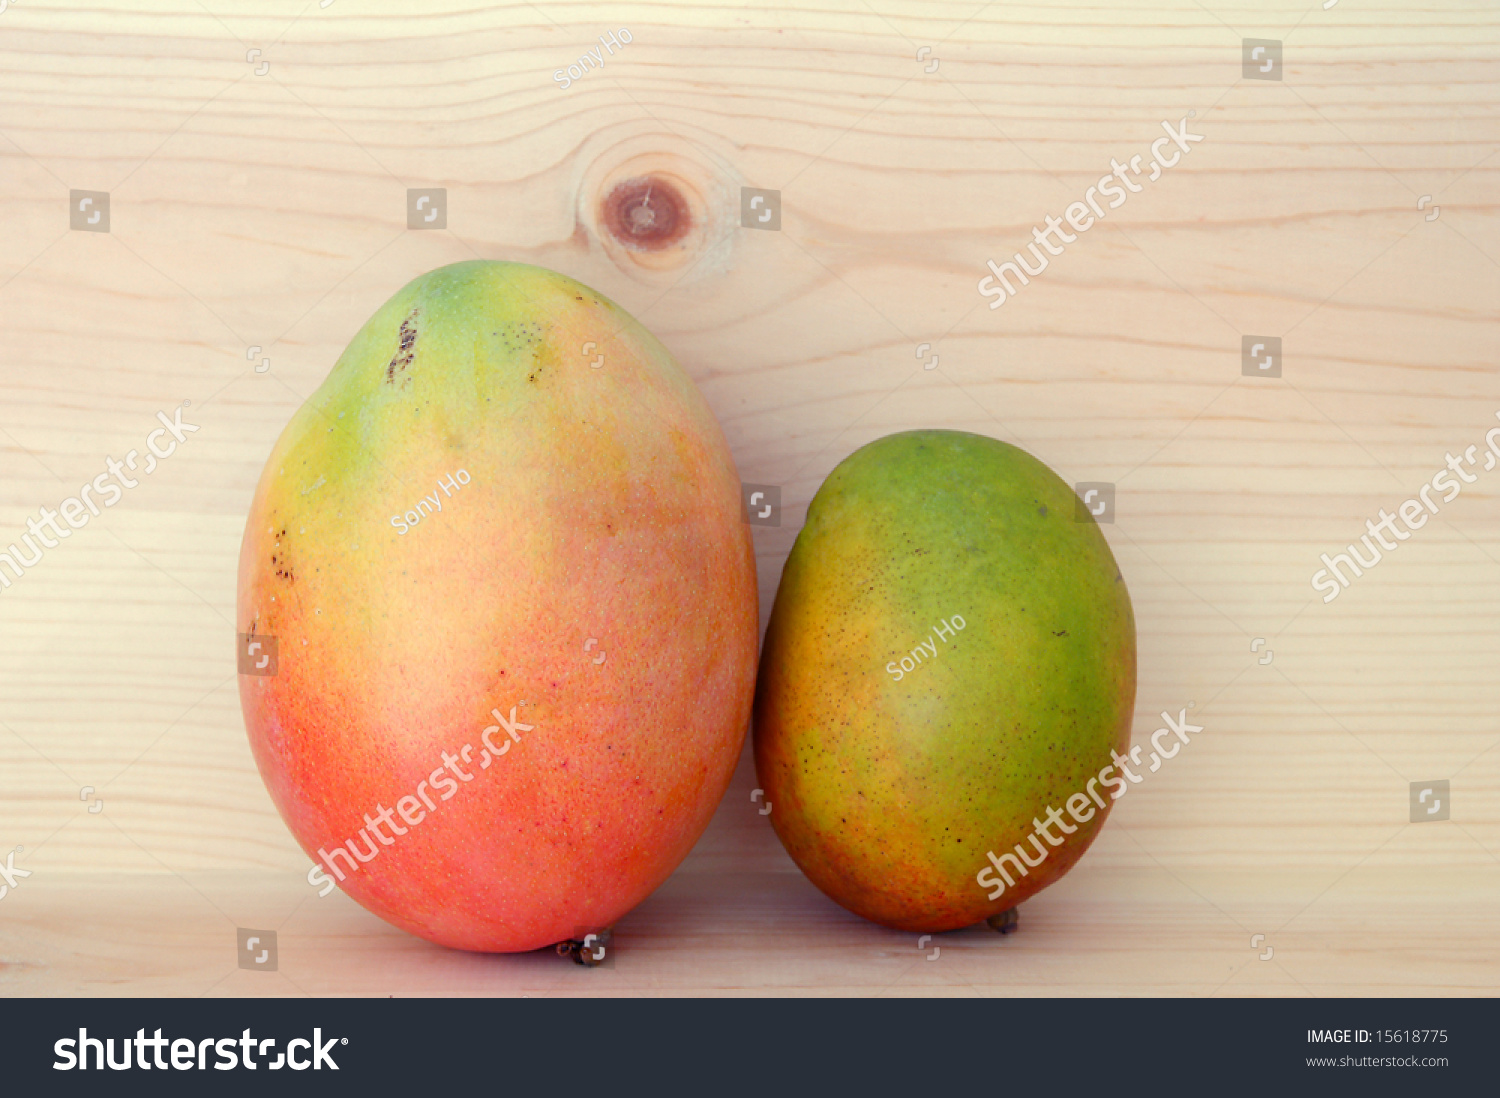 Biggest mangos on the camera